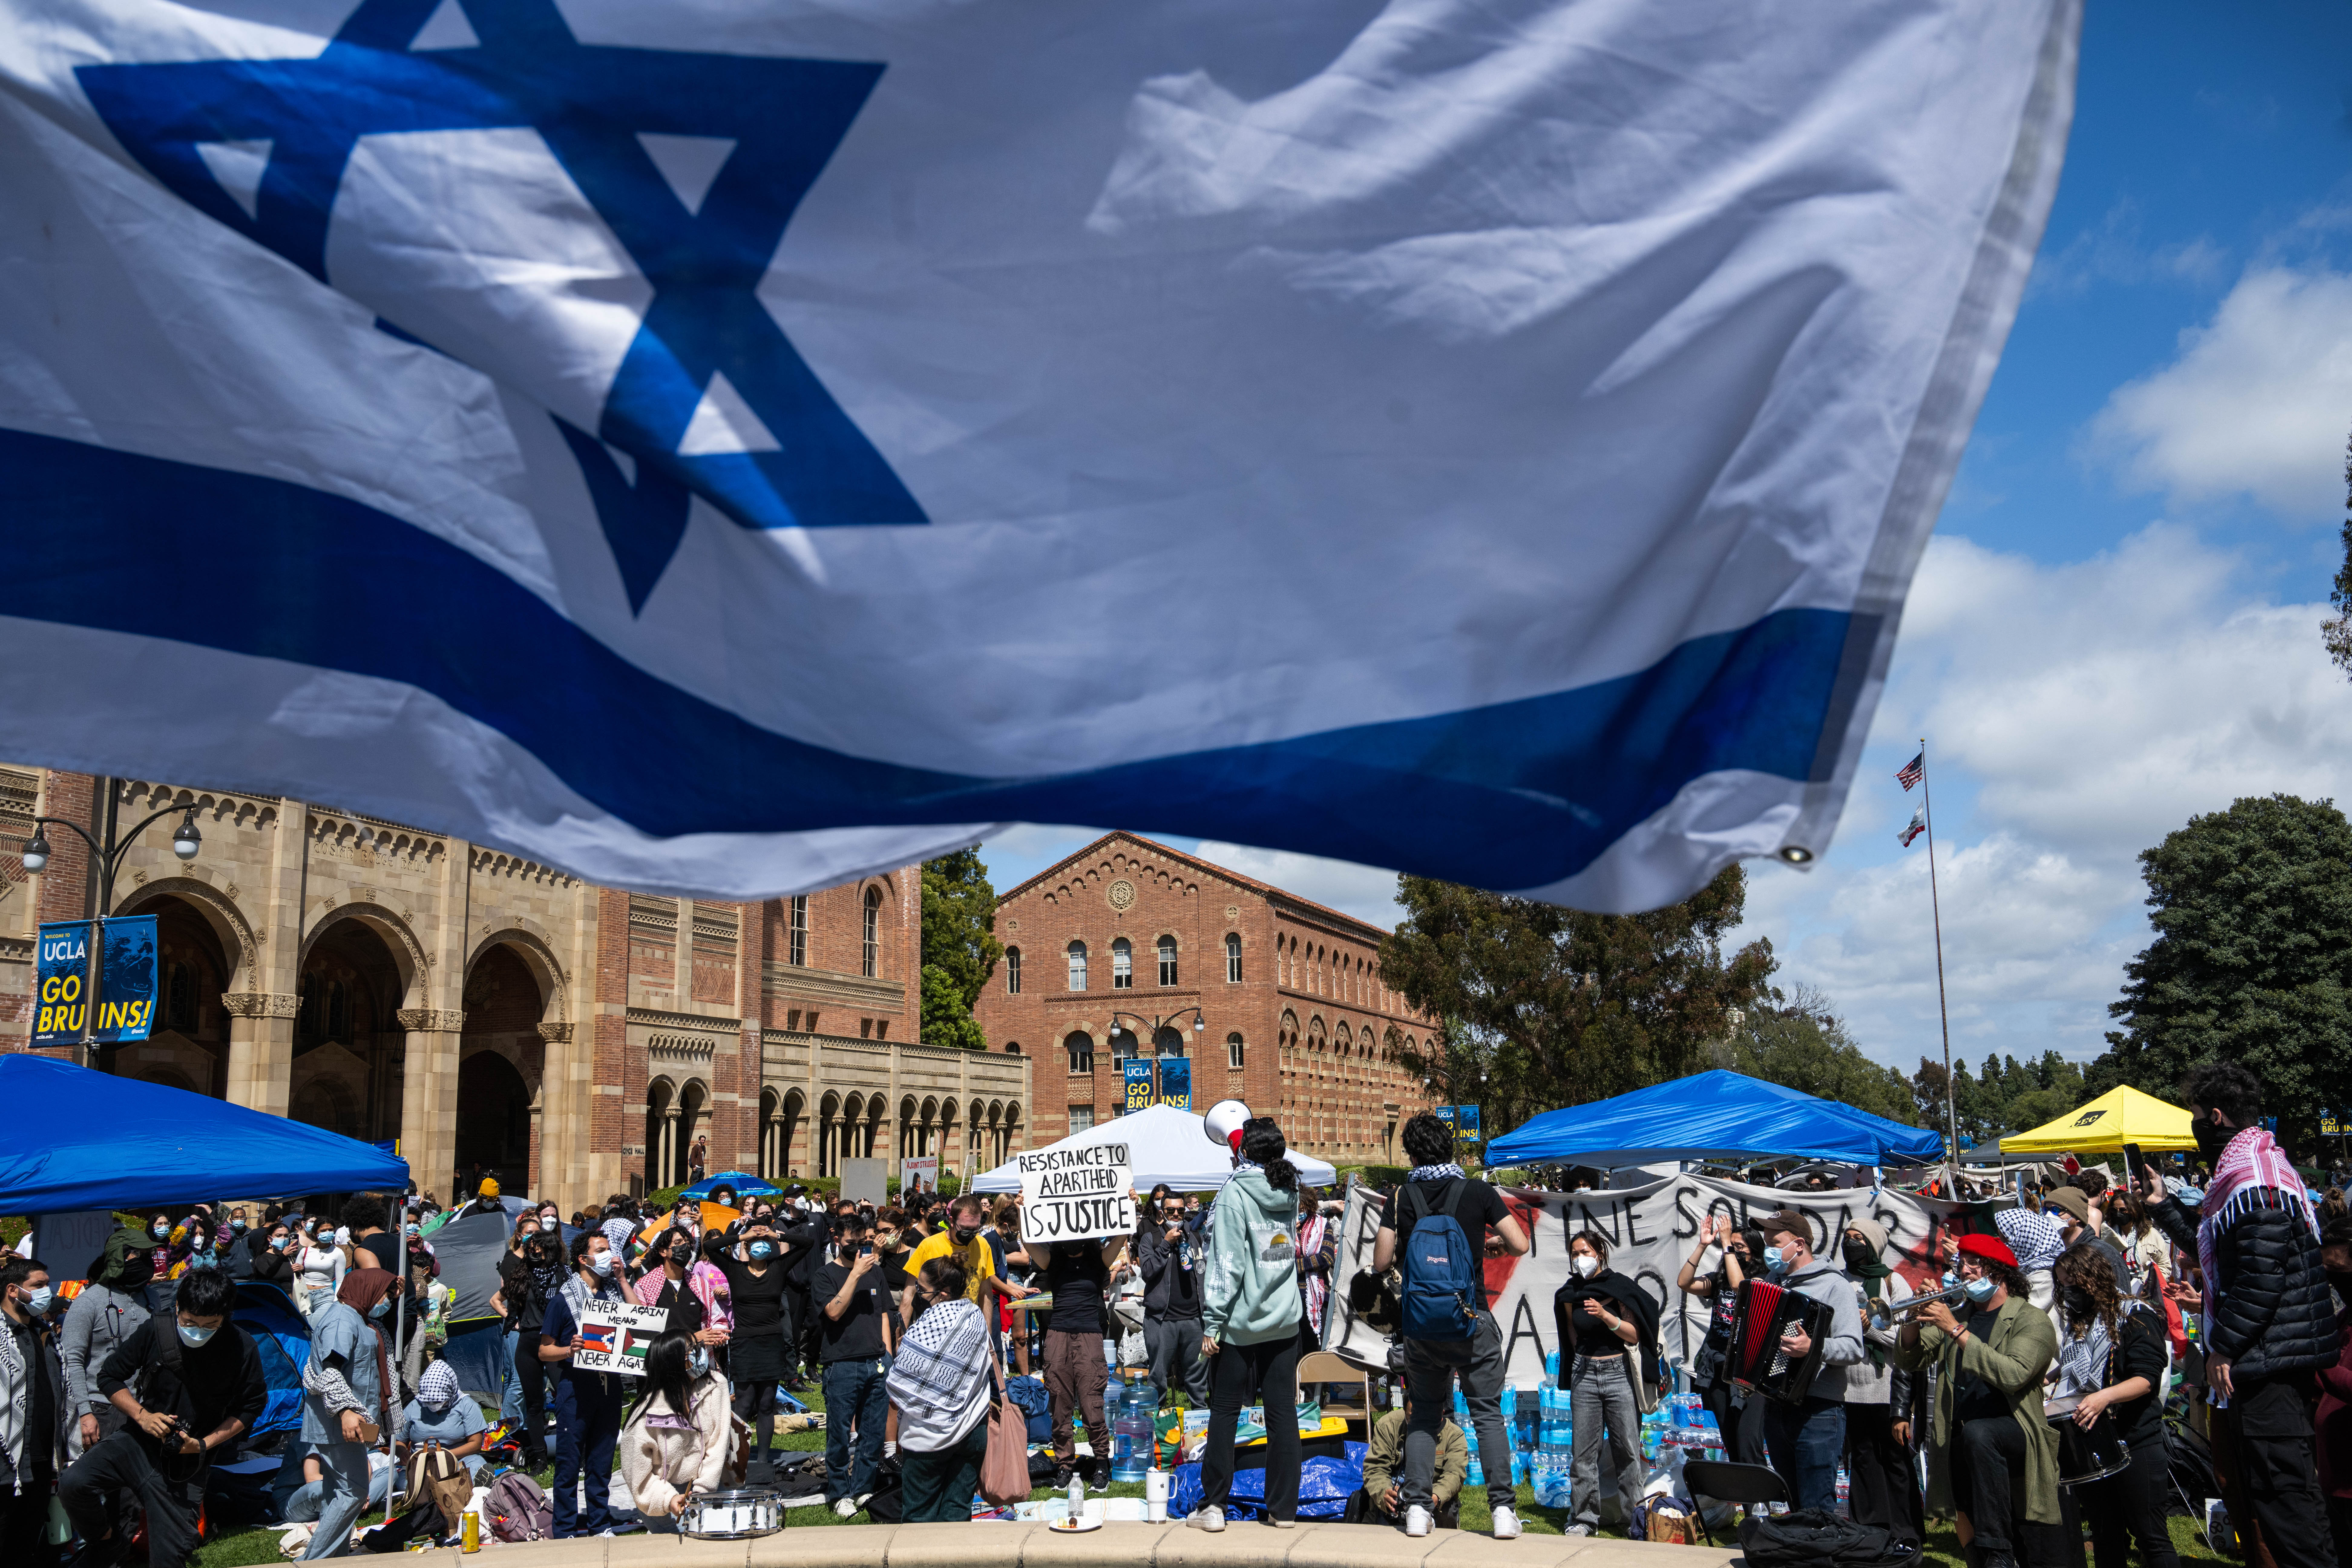 Conservative Students Claim UCLA Blocked Pro-Israel Event